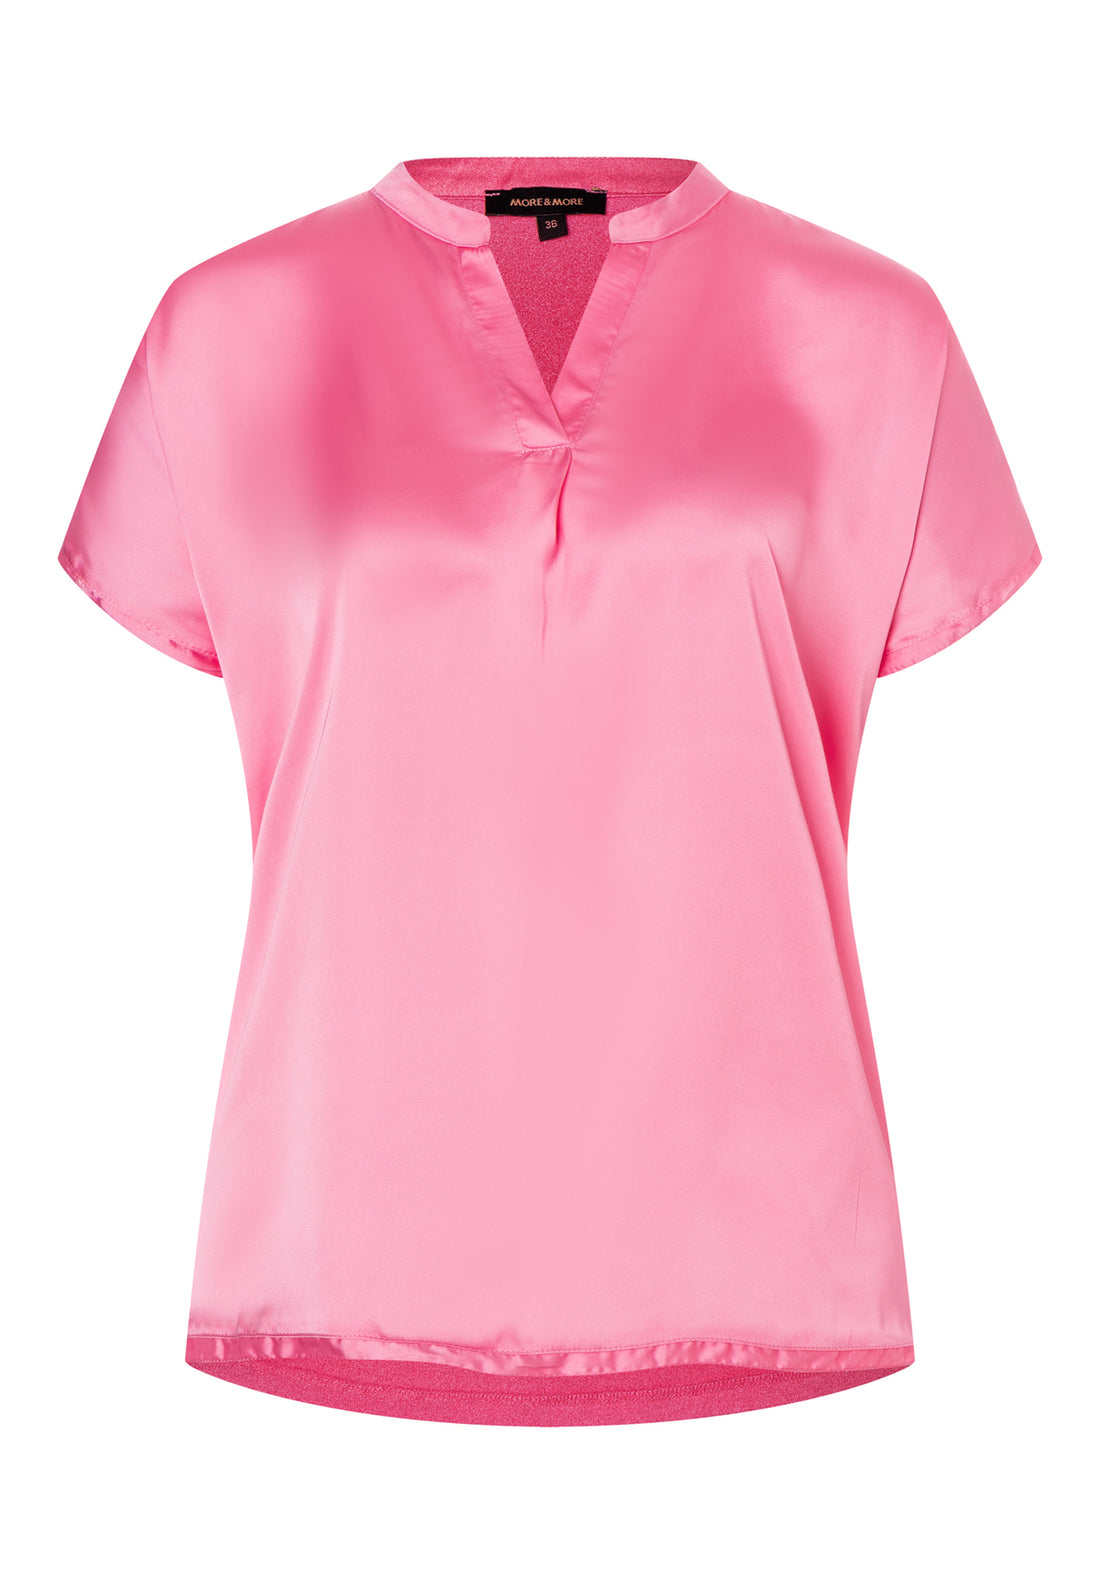 Blouse Shirt, Pink - 01